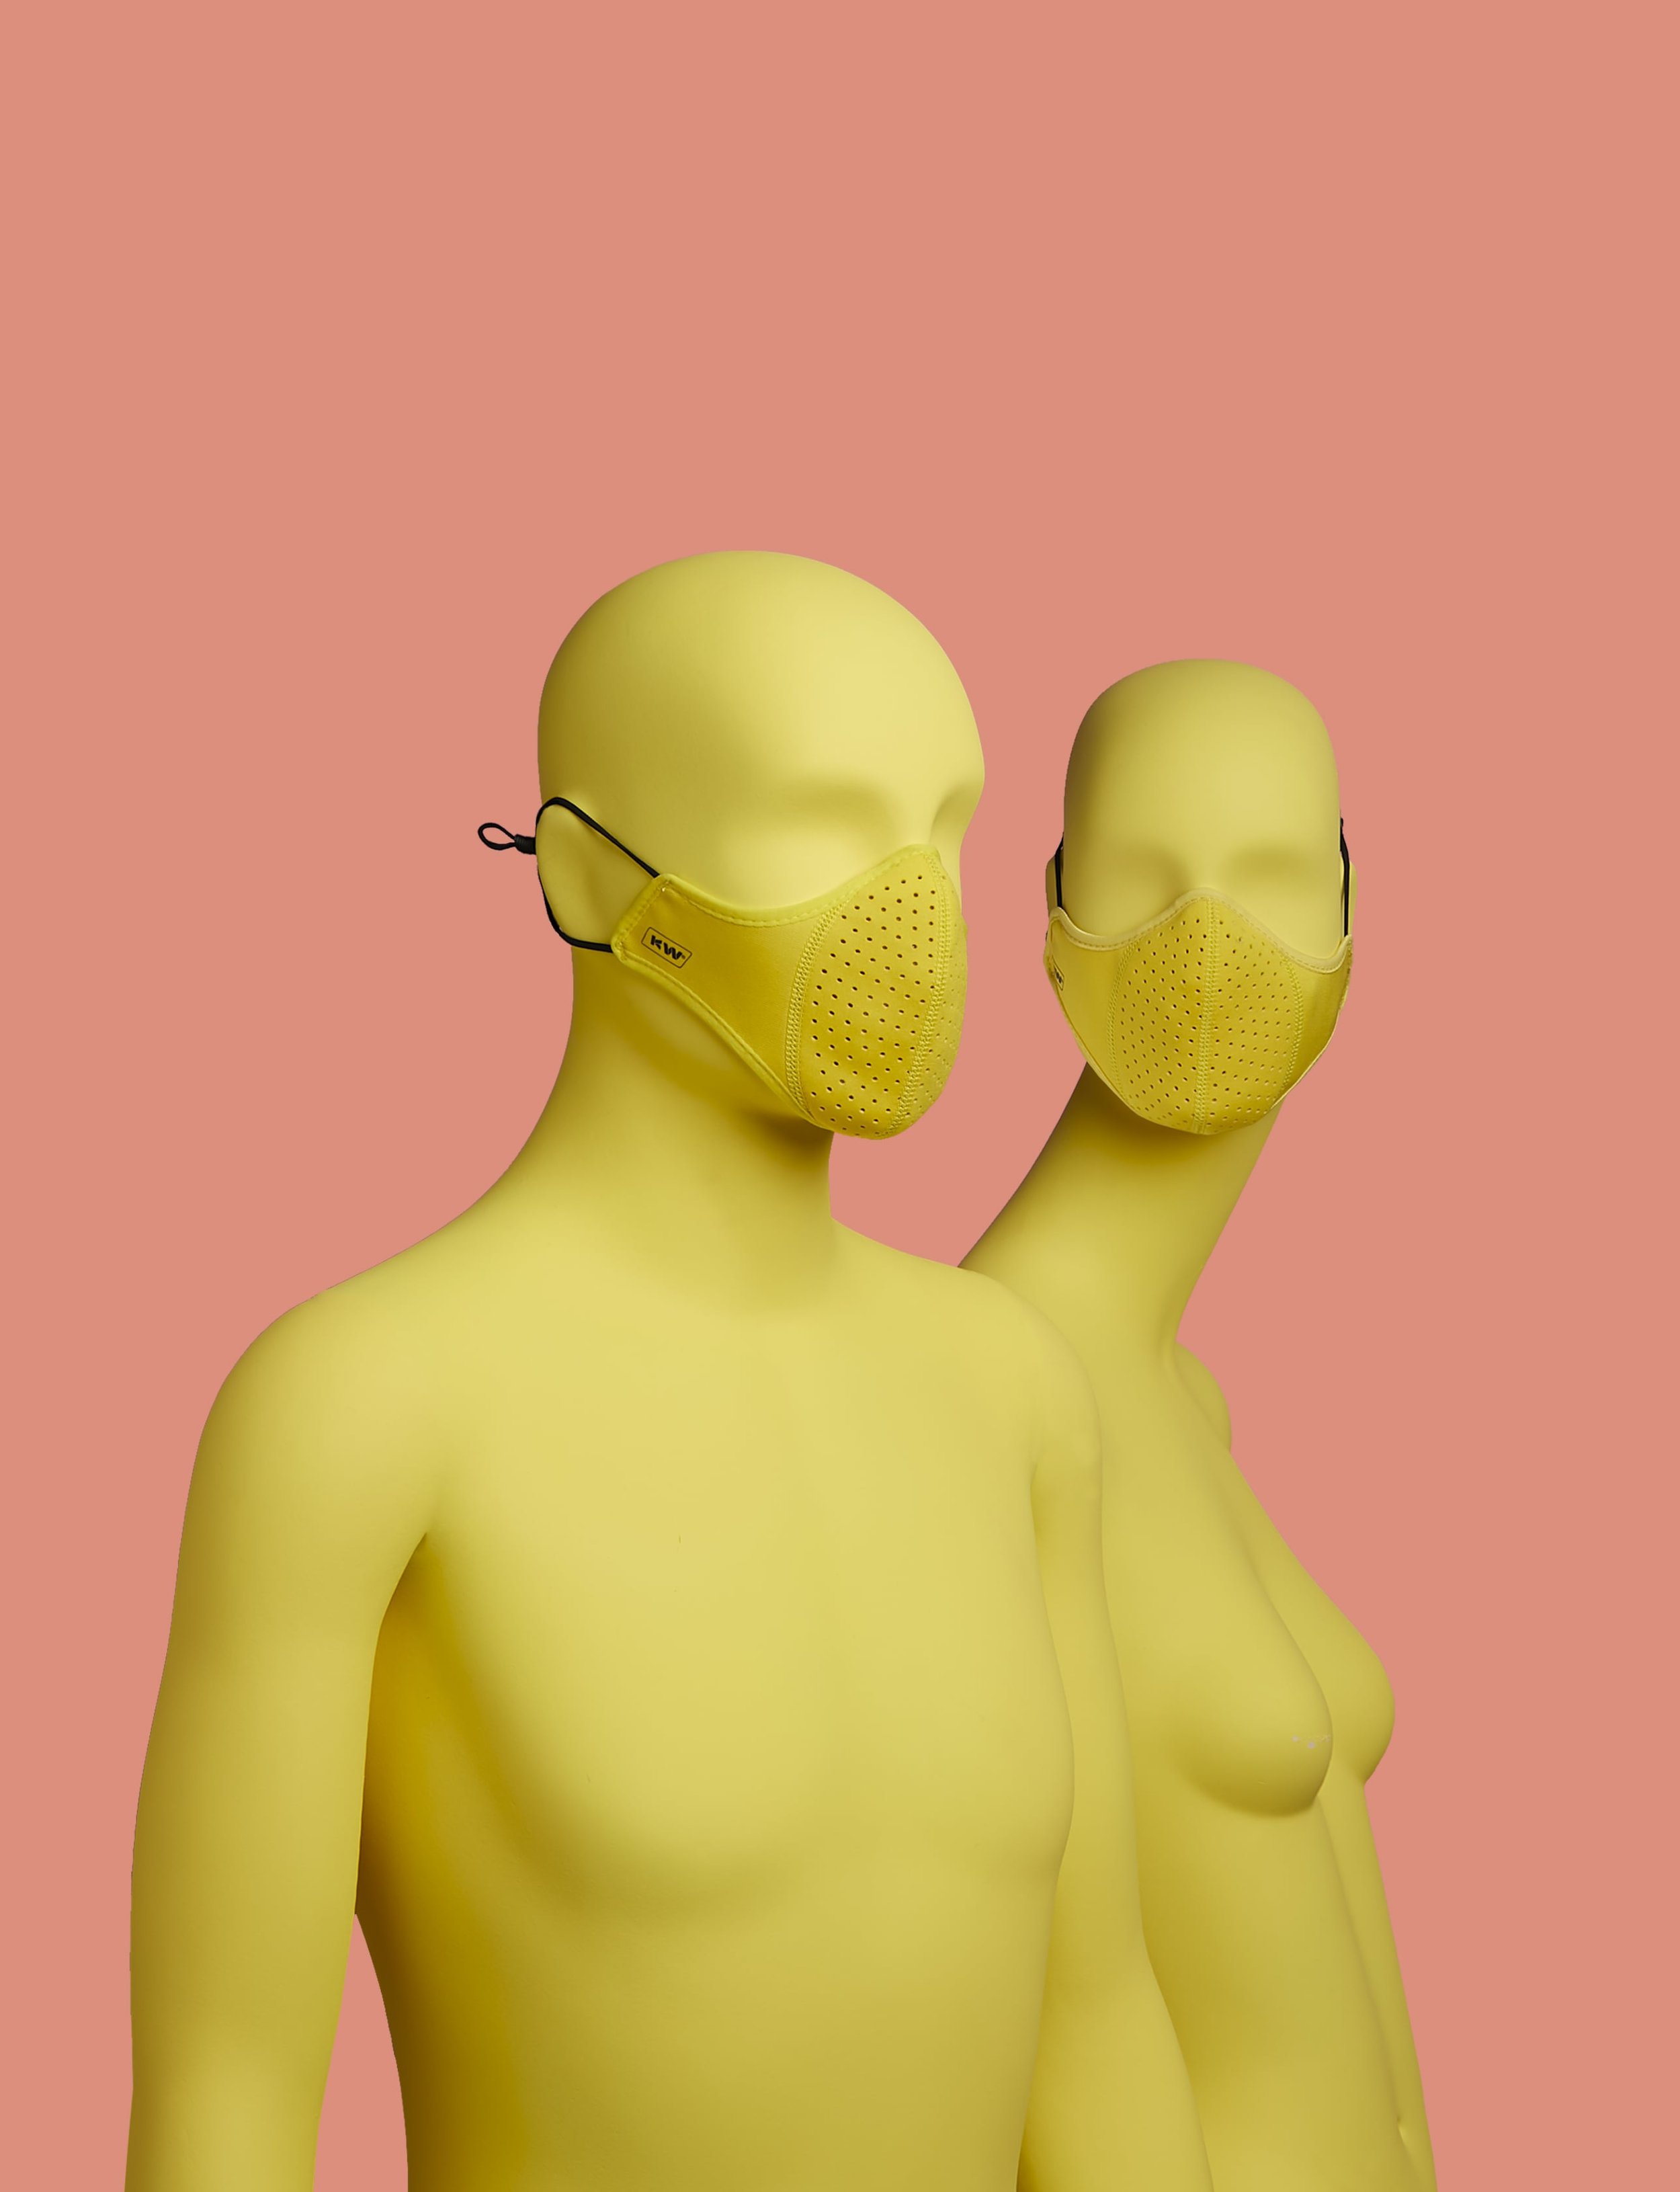 mannequin_yellowmask_2-min.jpg